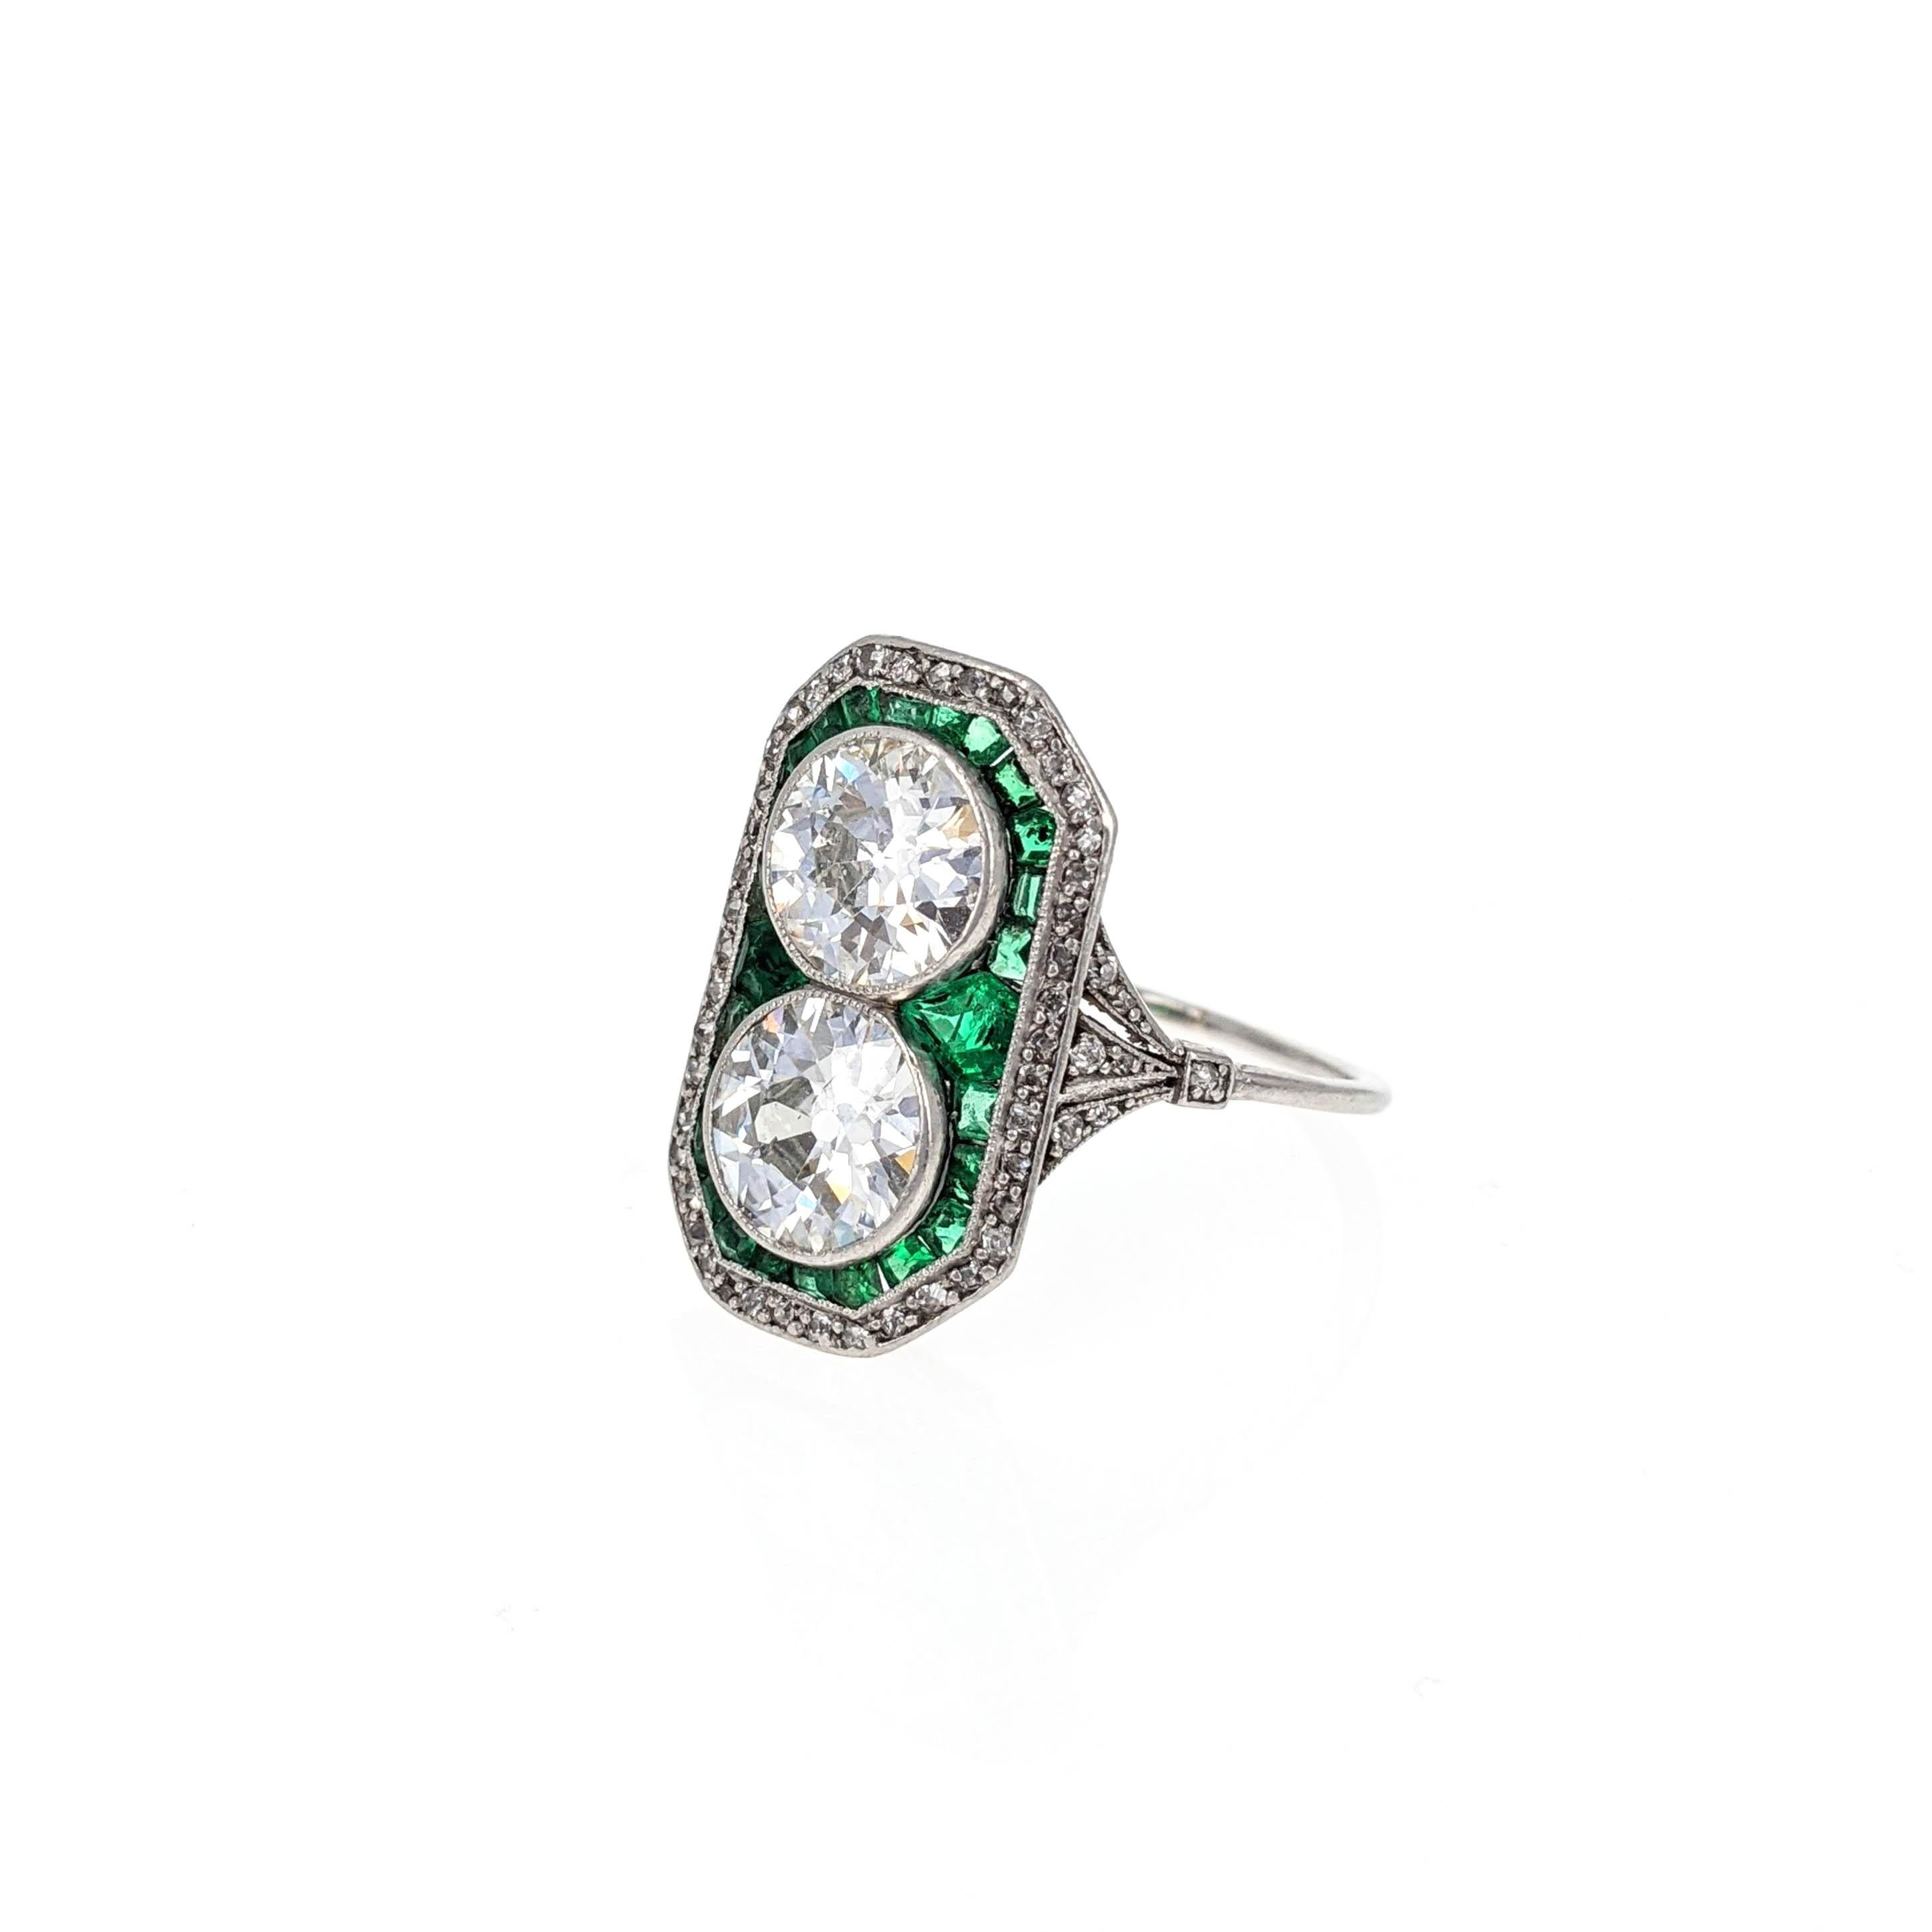 Women's or Men's Belle Époque Old European Cut Diamond Emerald and Platinum French Ring